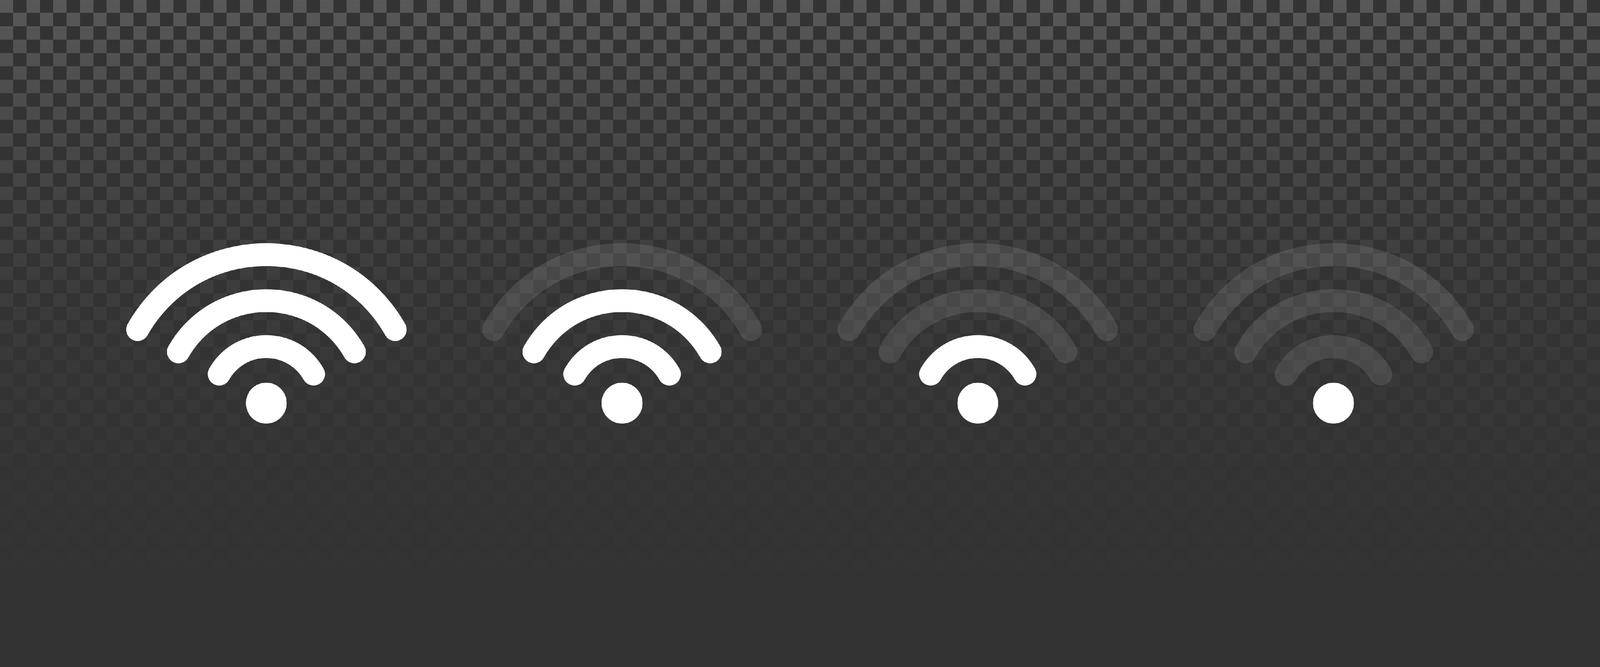 Wi-Fi icons levels. Signal strength indicator symbols isolated on dark transparent background. Vector EPS 10